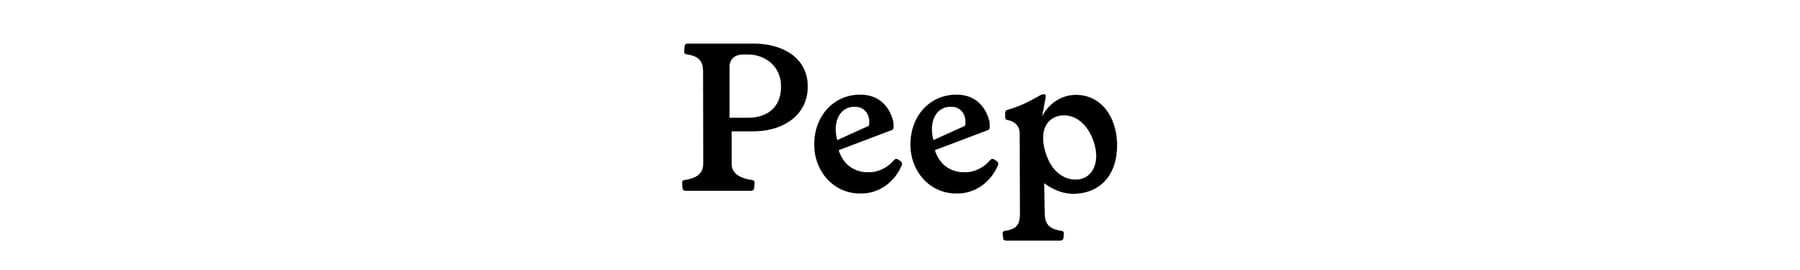 Peep Publication